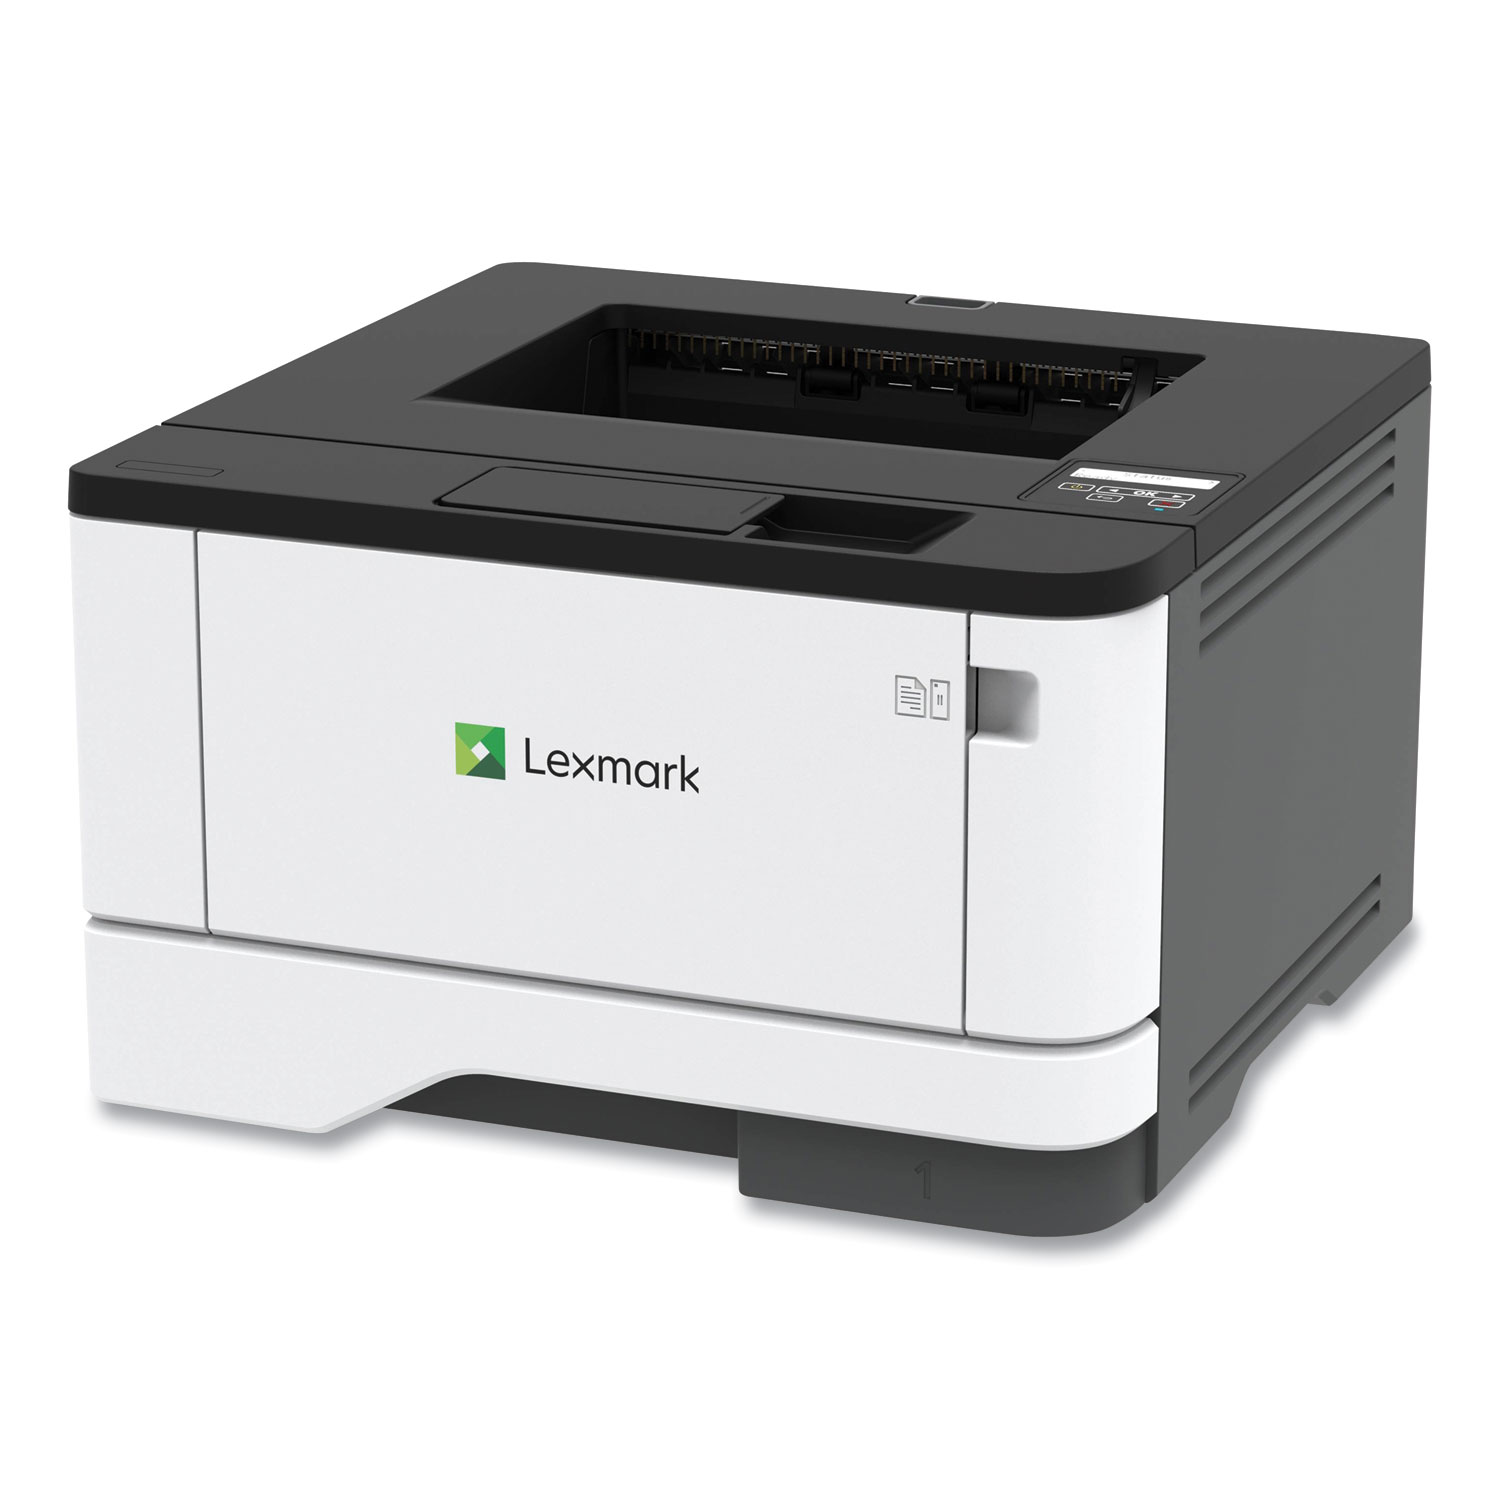 Lexmark™ MS431dw Laser Printer